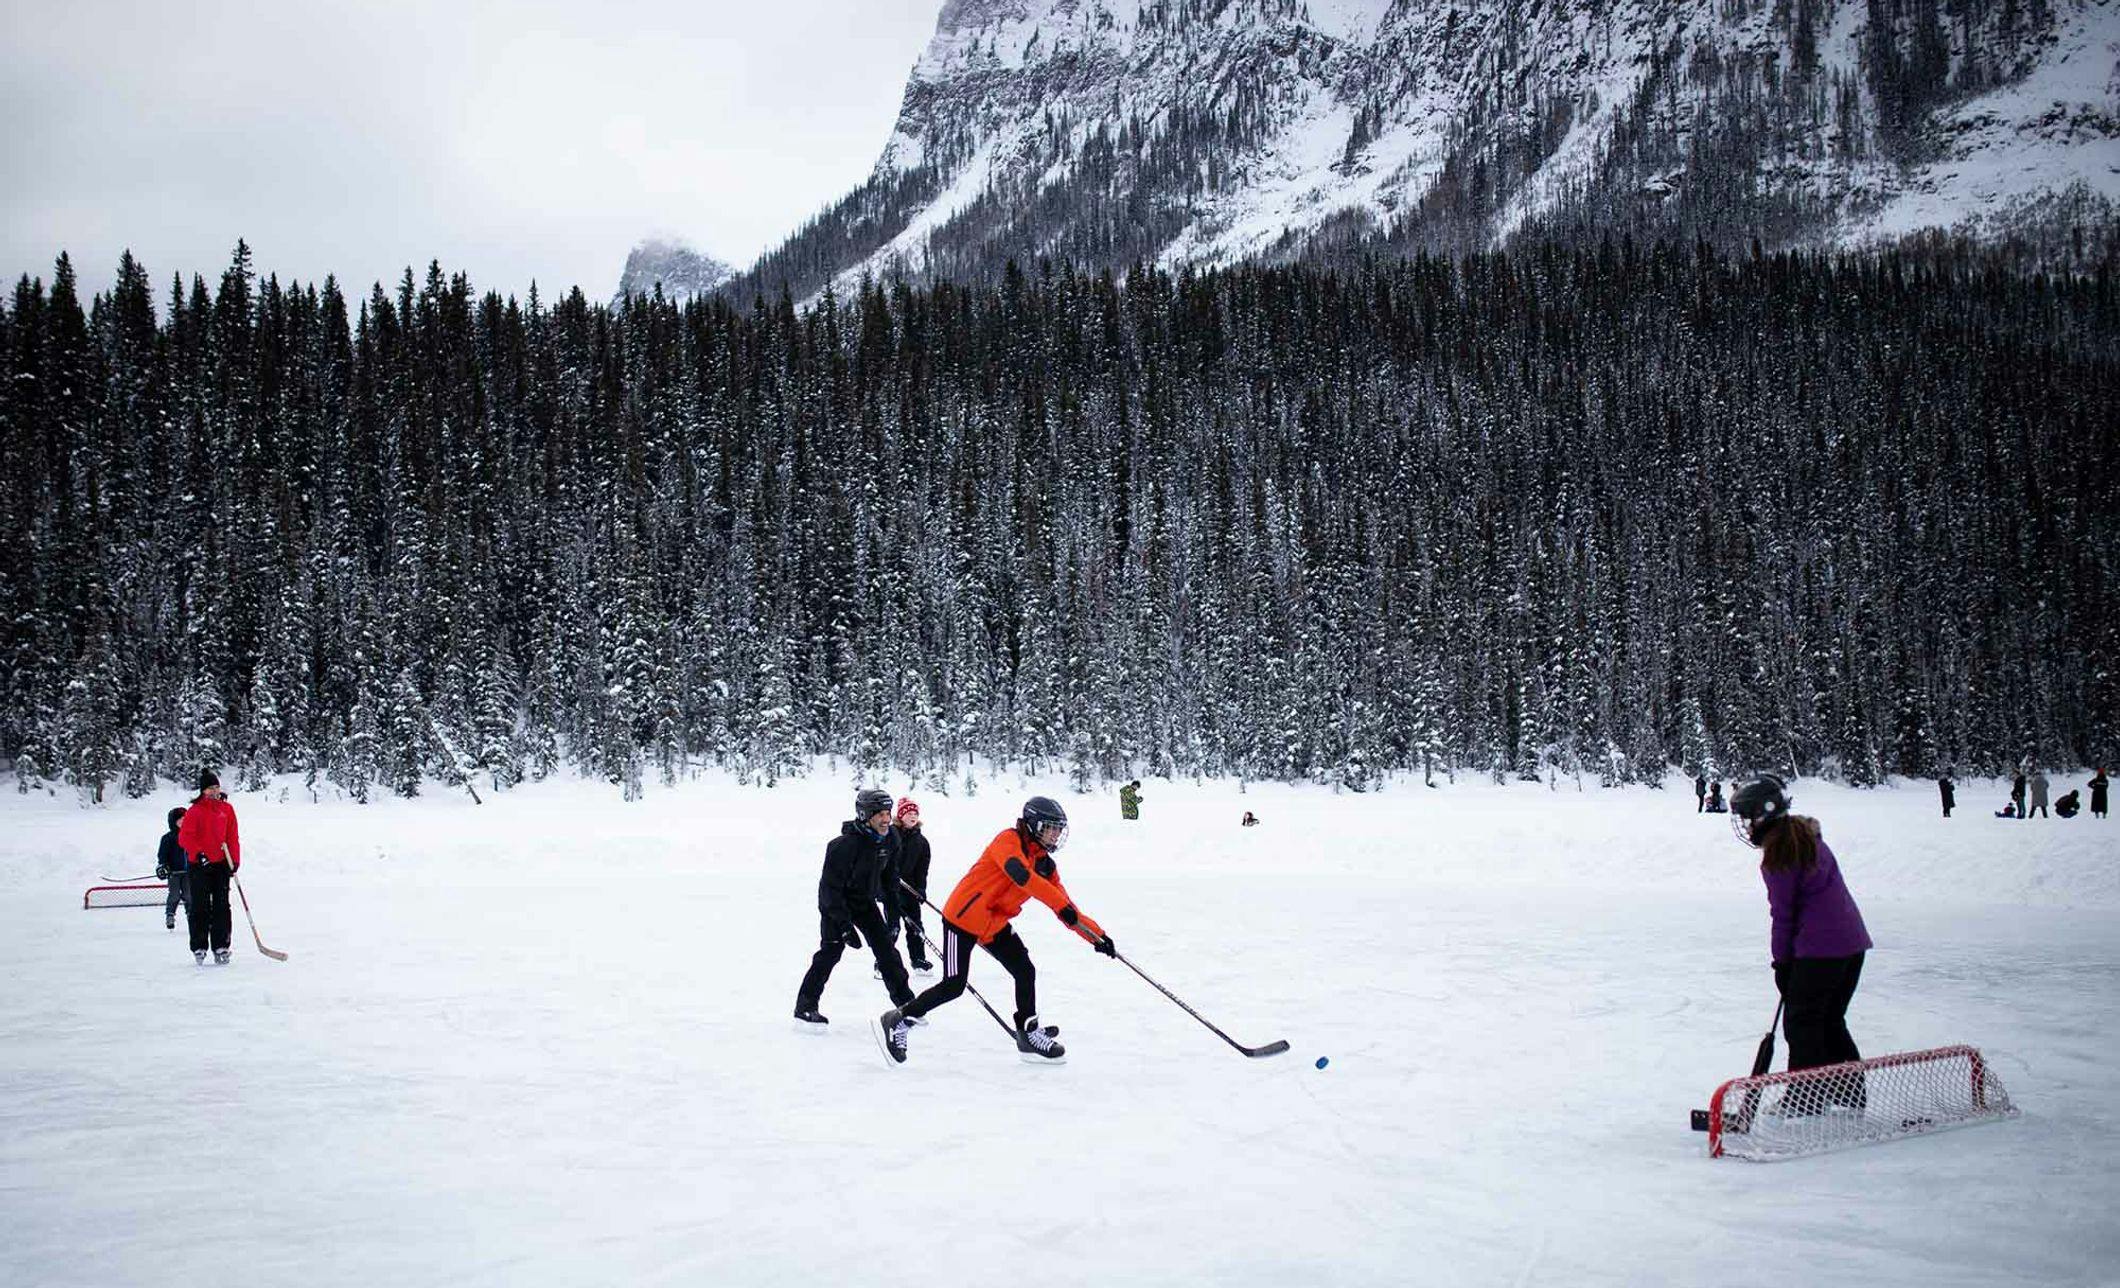 Winter Hockey Game at Lake Louise, Banff National Park